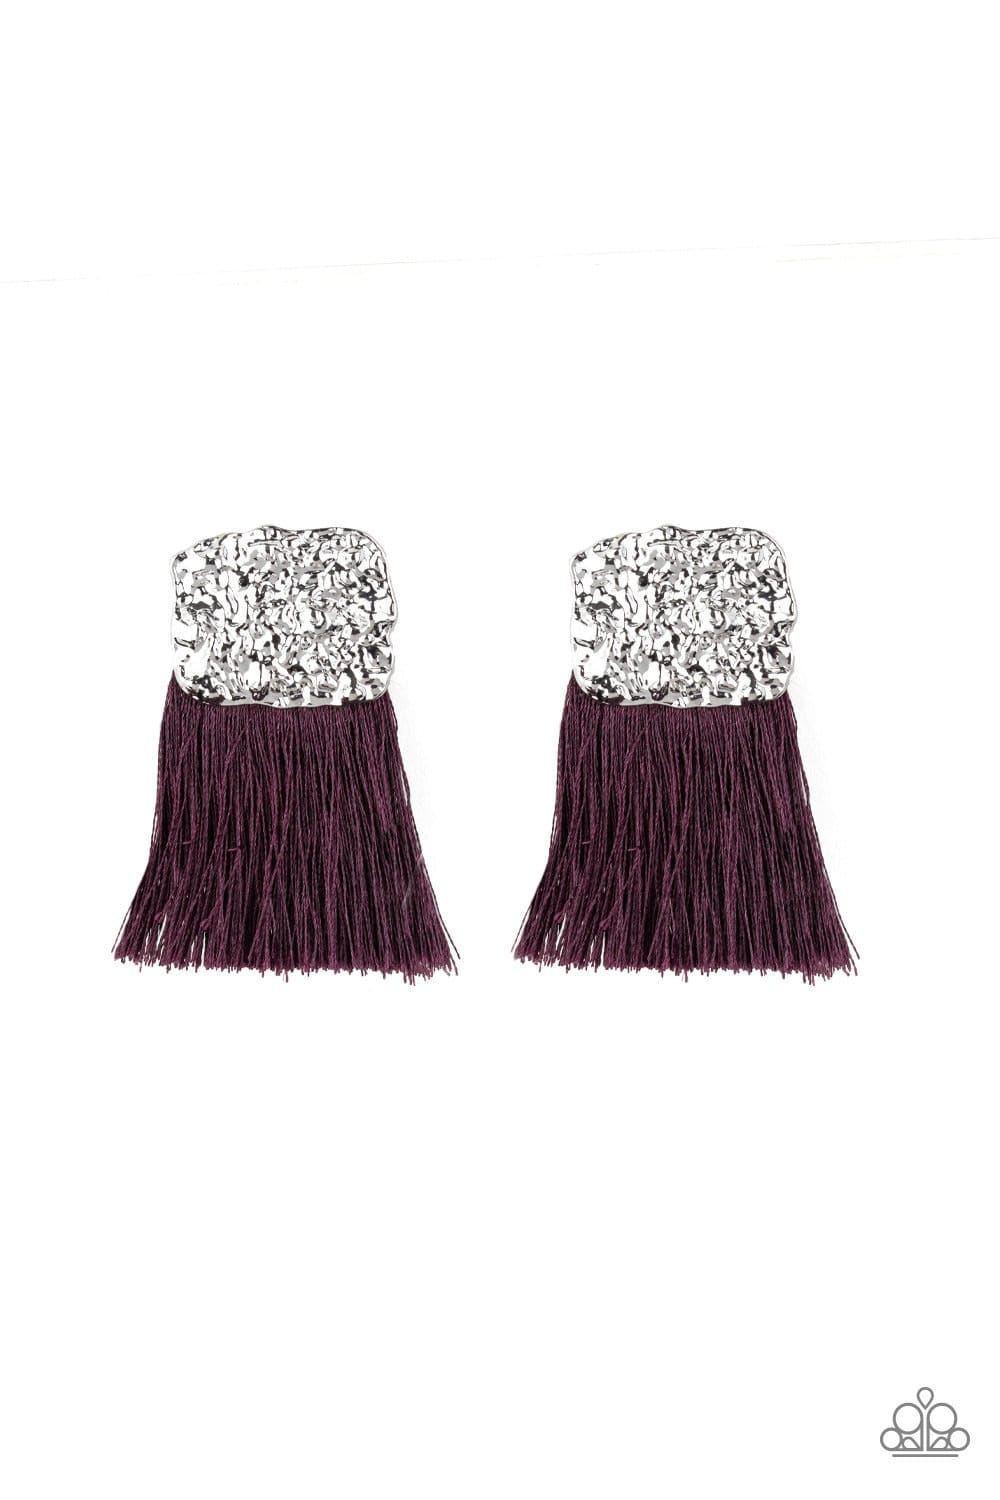 Plume Bloom - Purple Tassel Earrings - Paparazzi Accessories - GlaMarous Titi Jewels